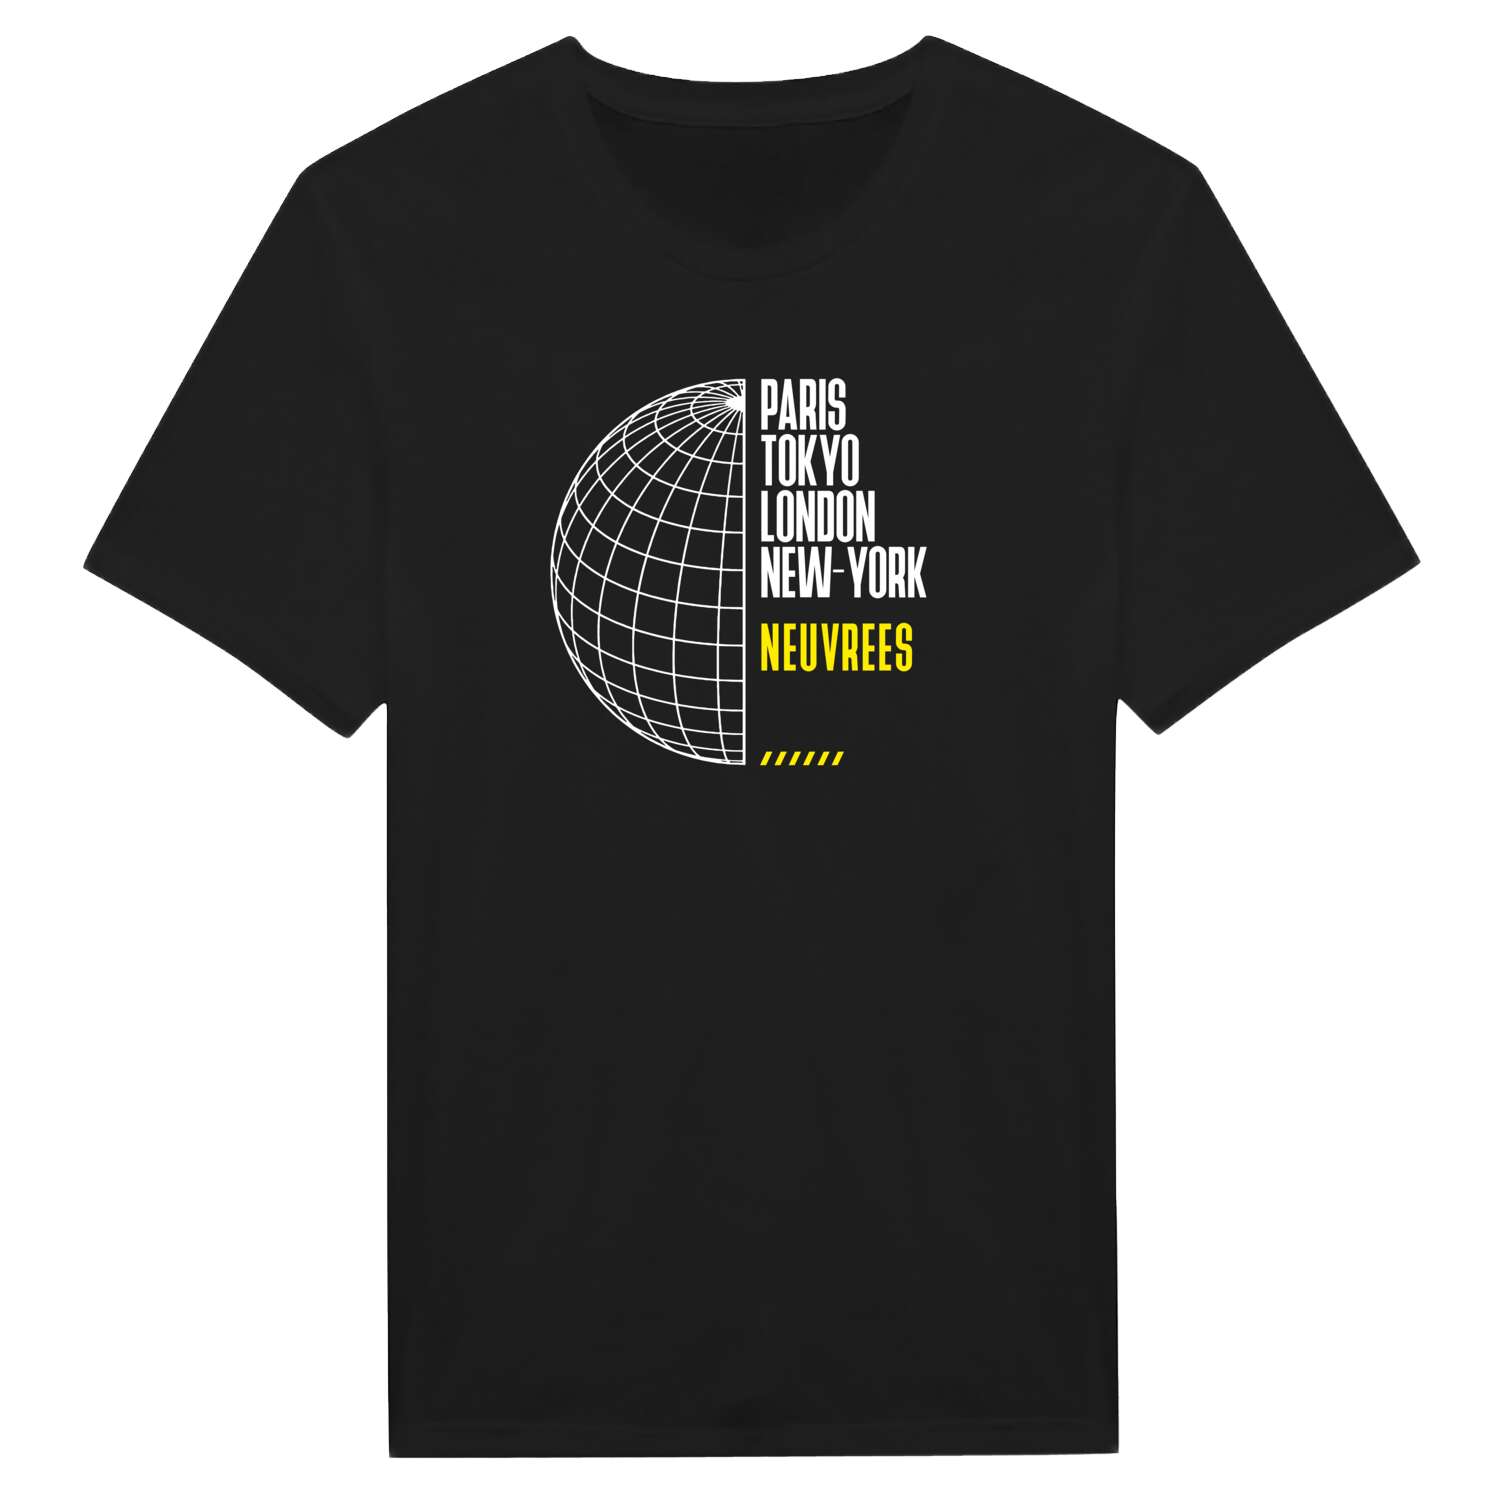 Neuvrees T-Shirt »Paris Tokyo London«